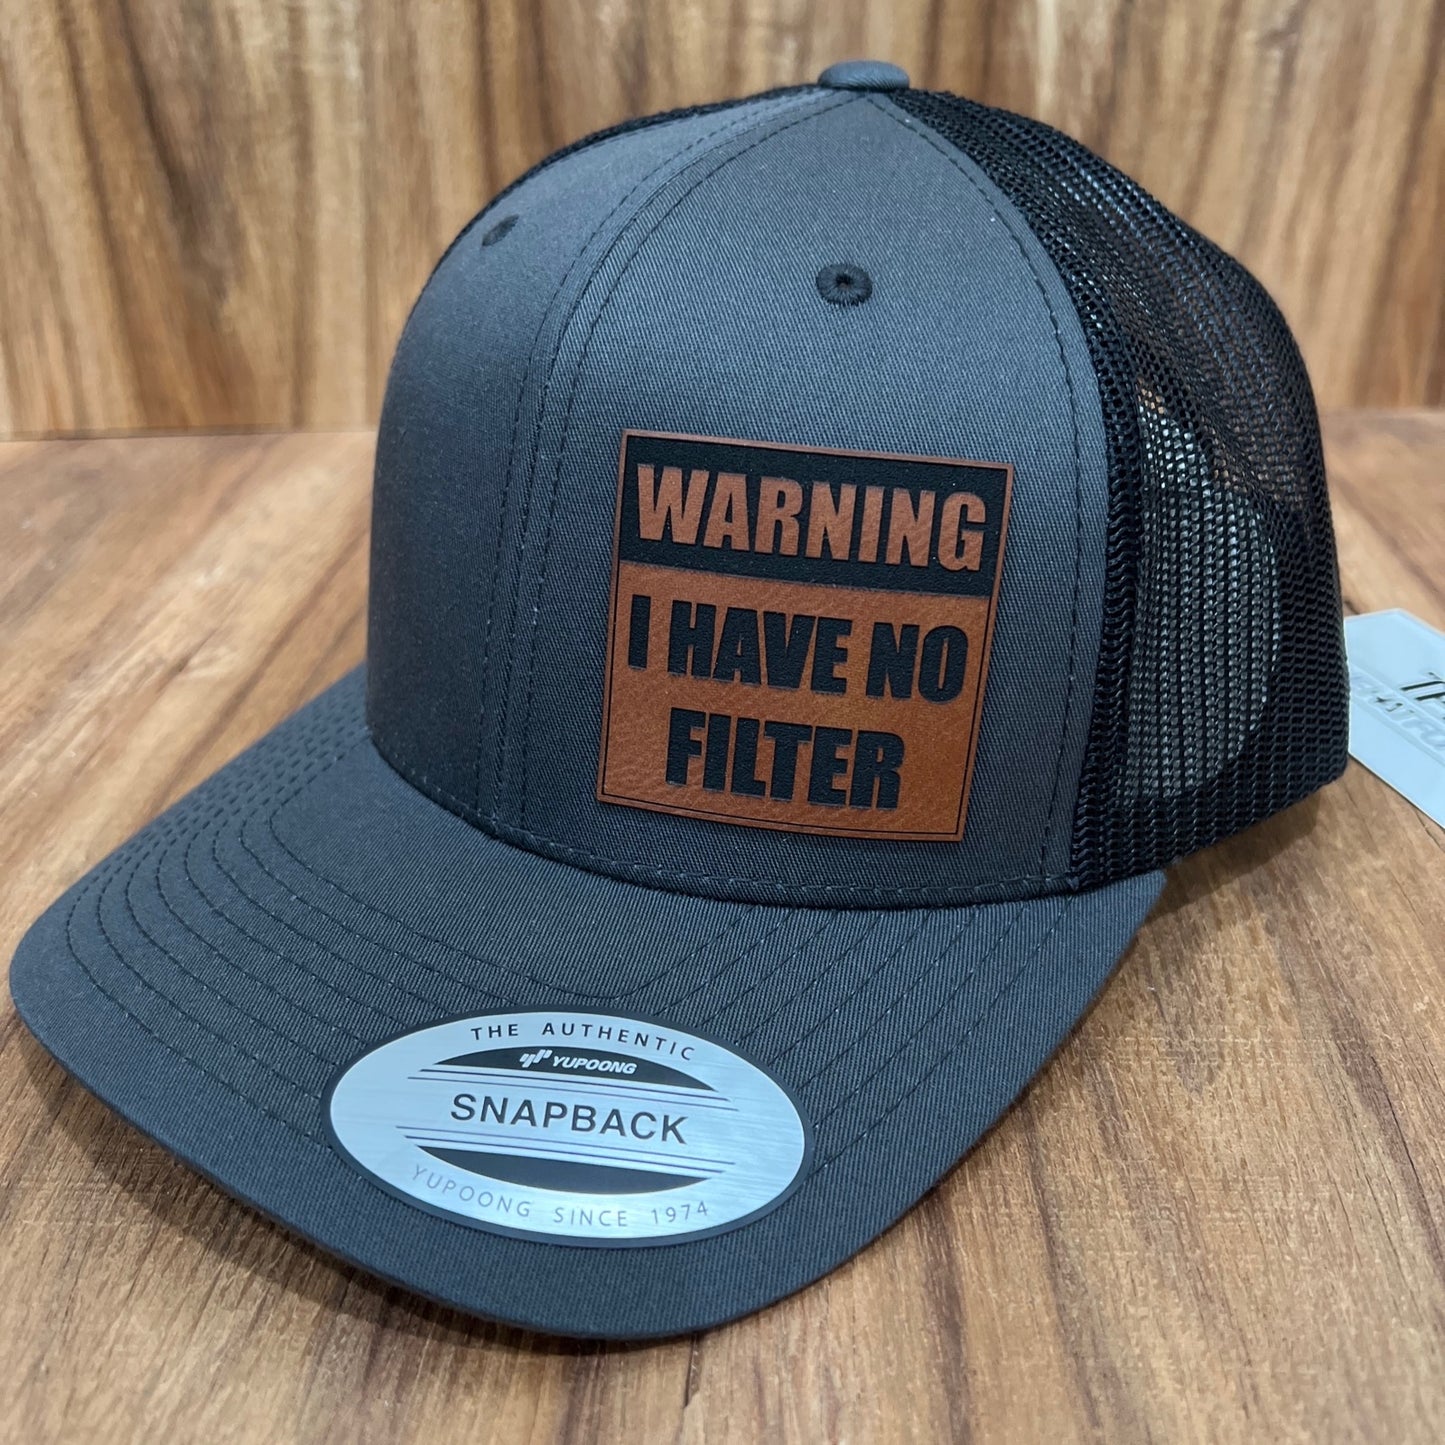 WARNING I Have No Filter - Yupoong 6606 SnapBack Trucker Hat